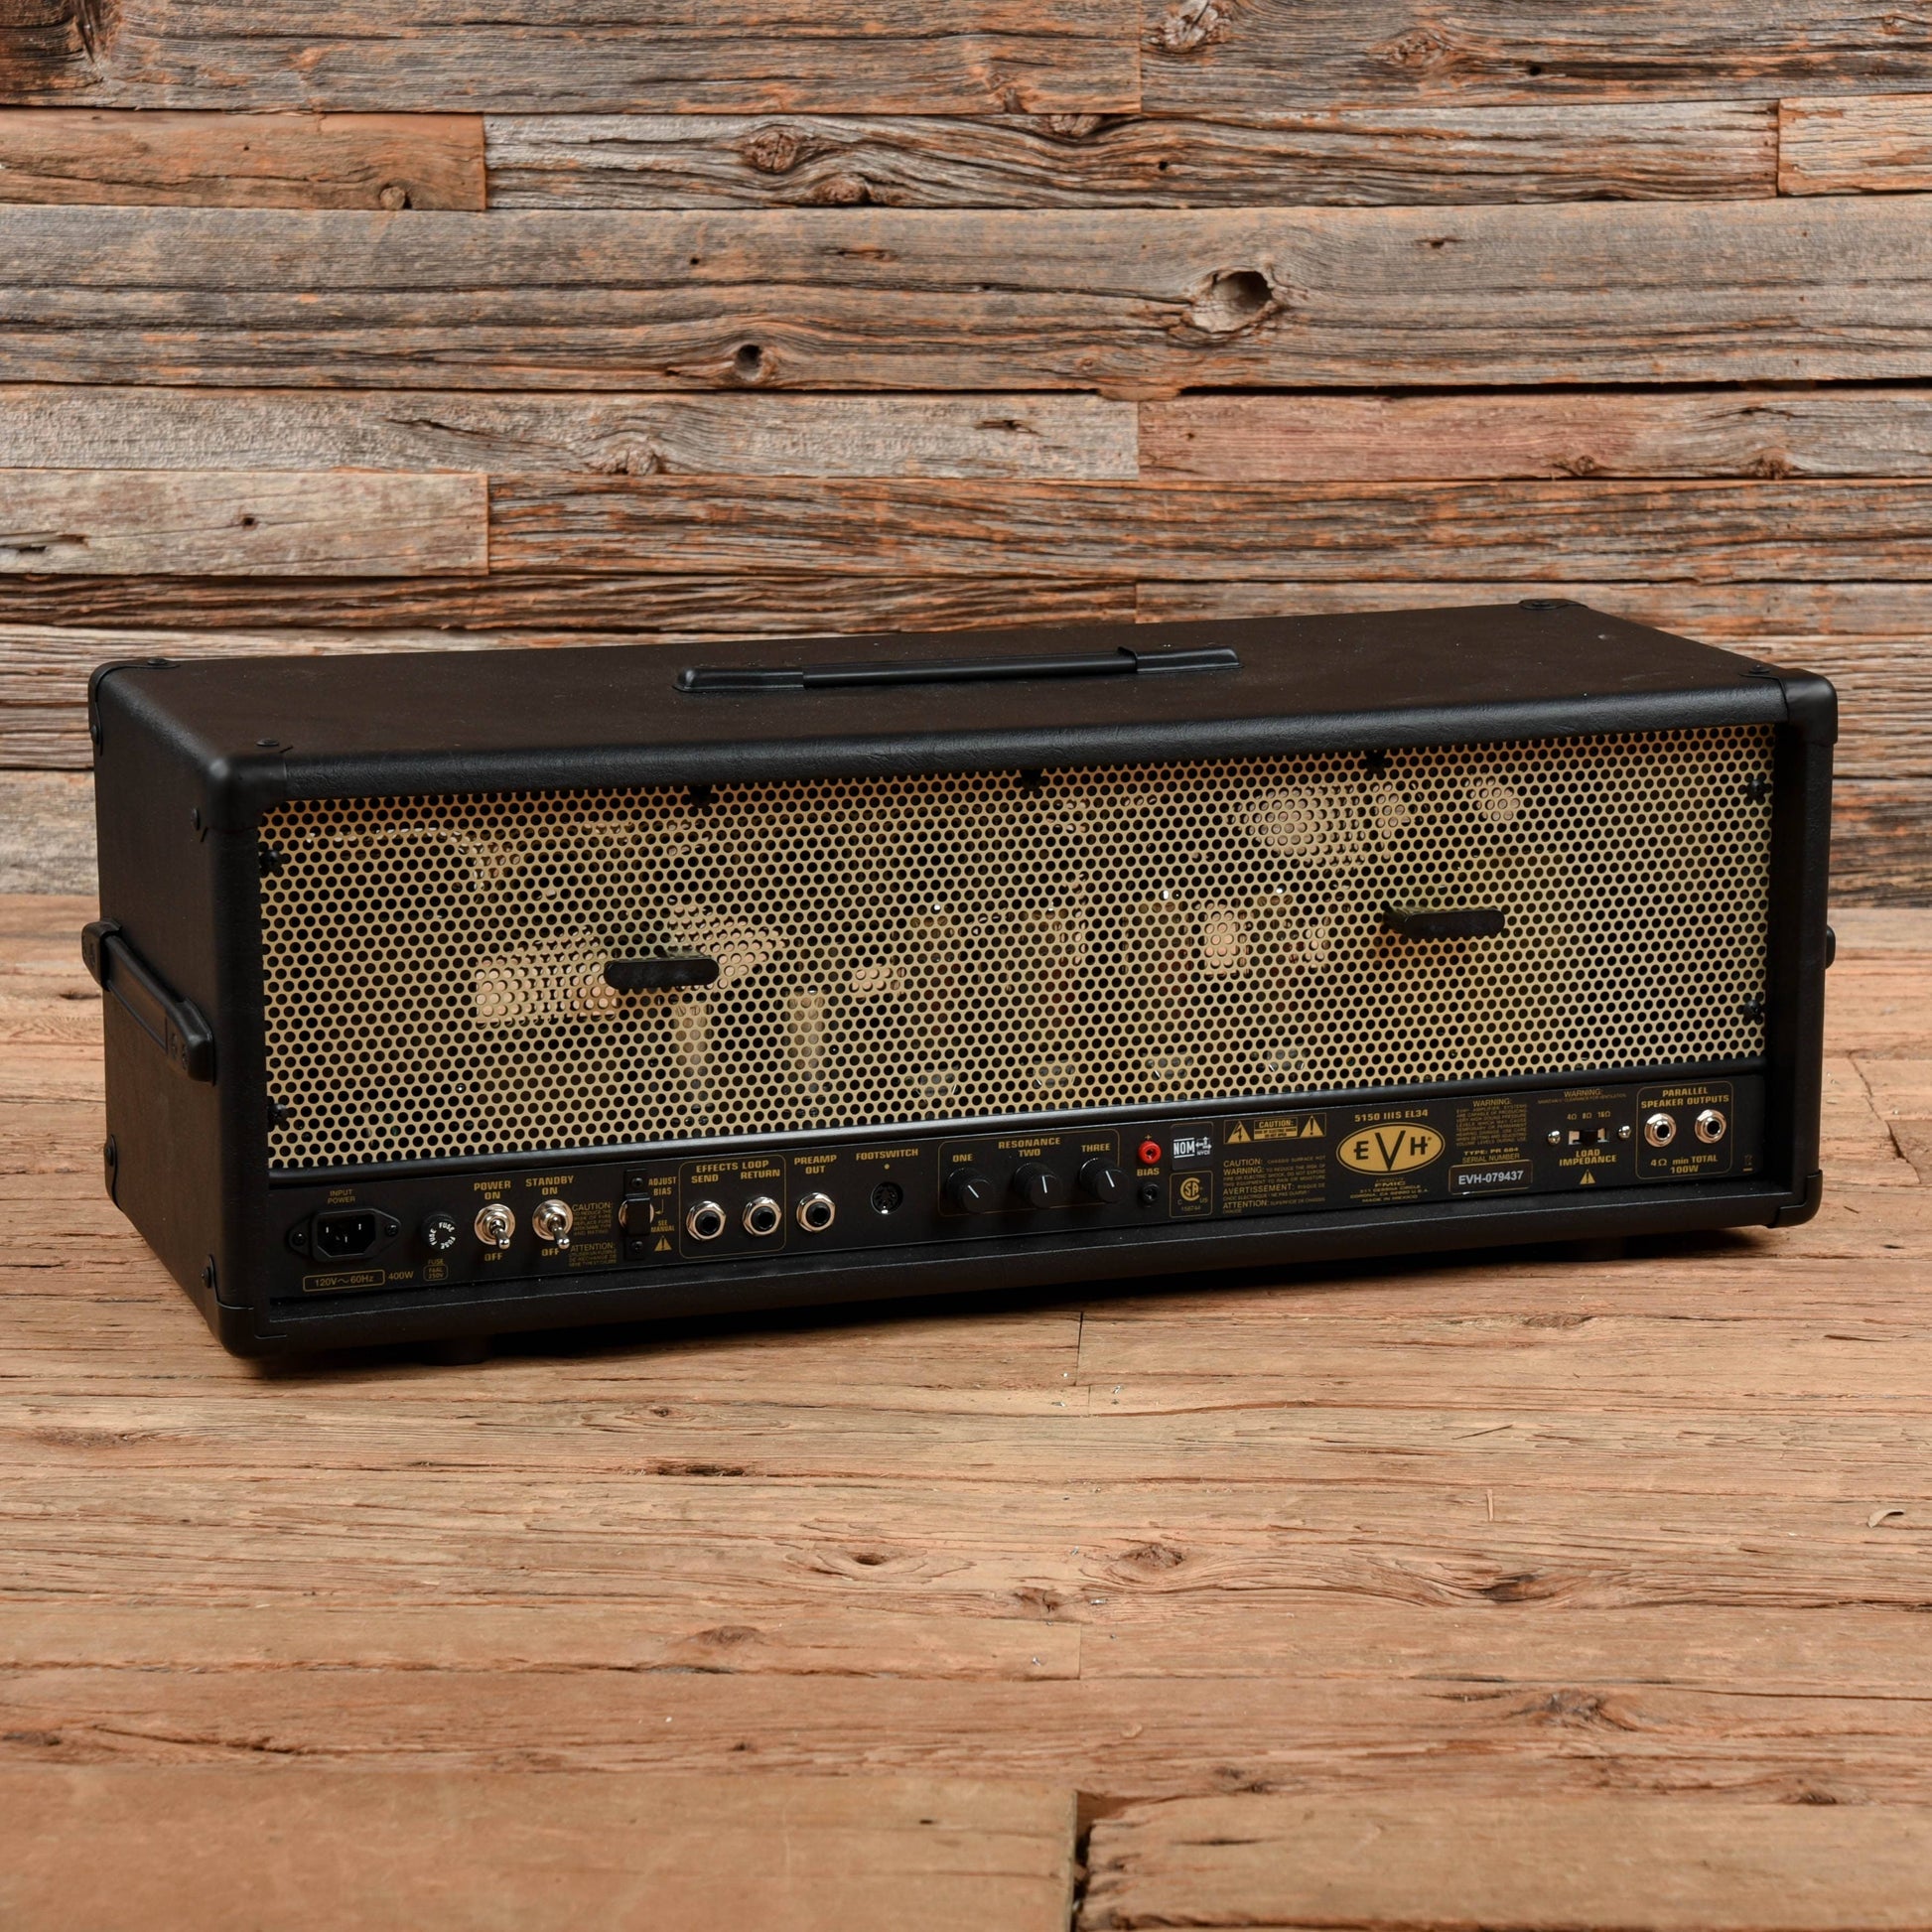 EVH 5150 III S EL34 3-Channel 100-Watt Guitar Amp Head Amps / Guitar Cabinets